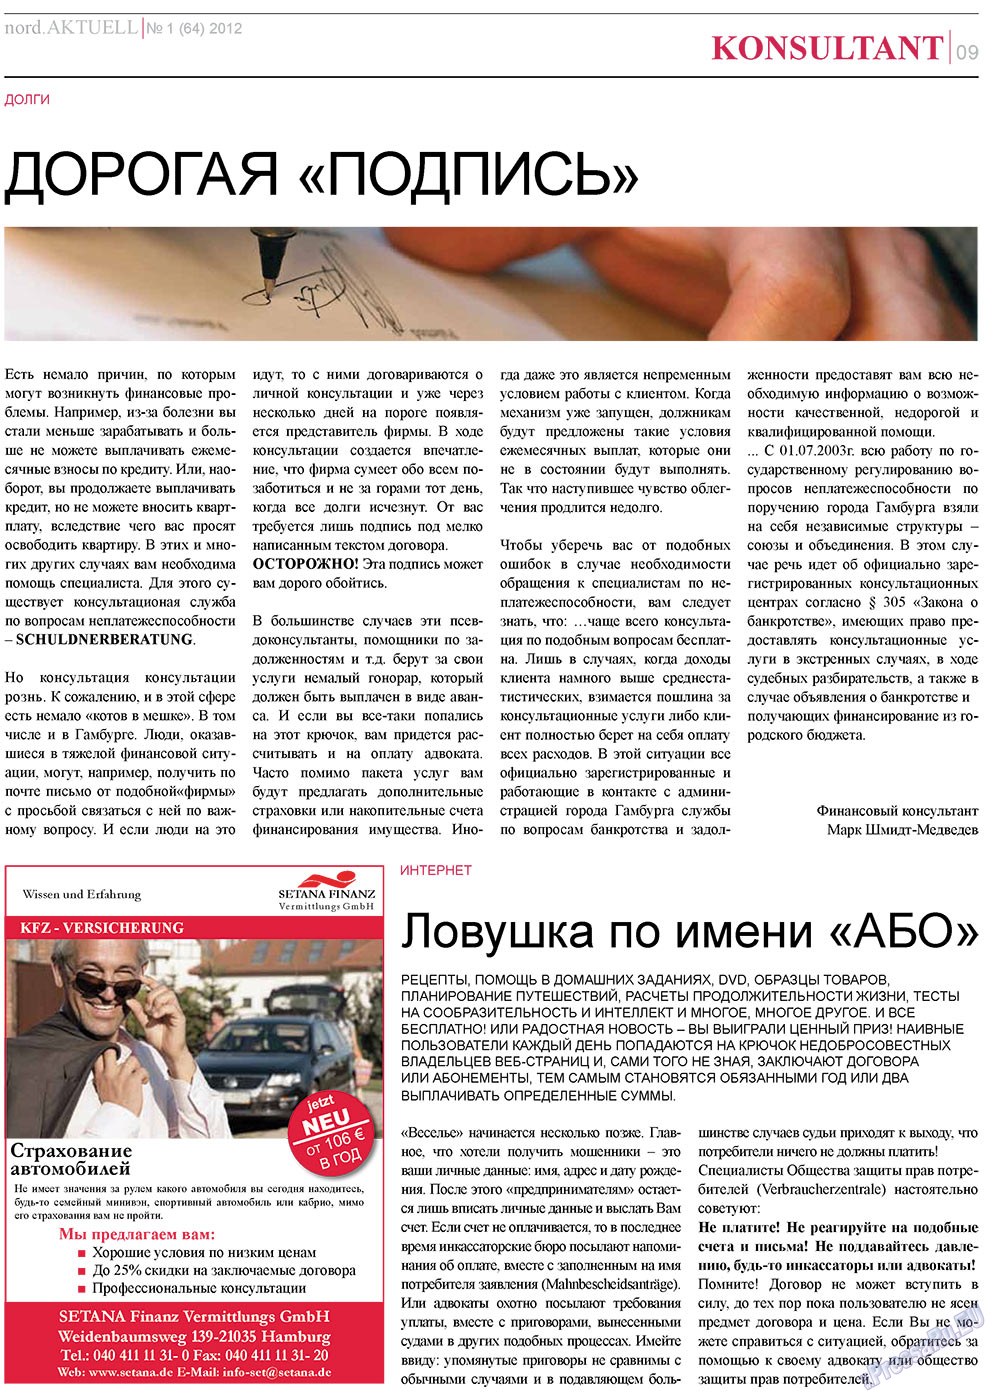 nord.Aktuell, газета. 2012 №1 стр.9